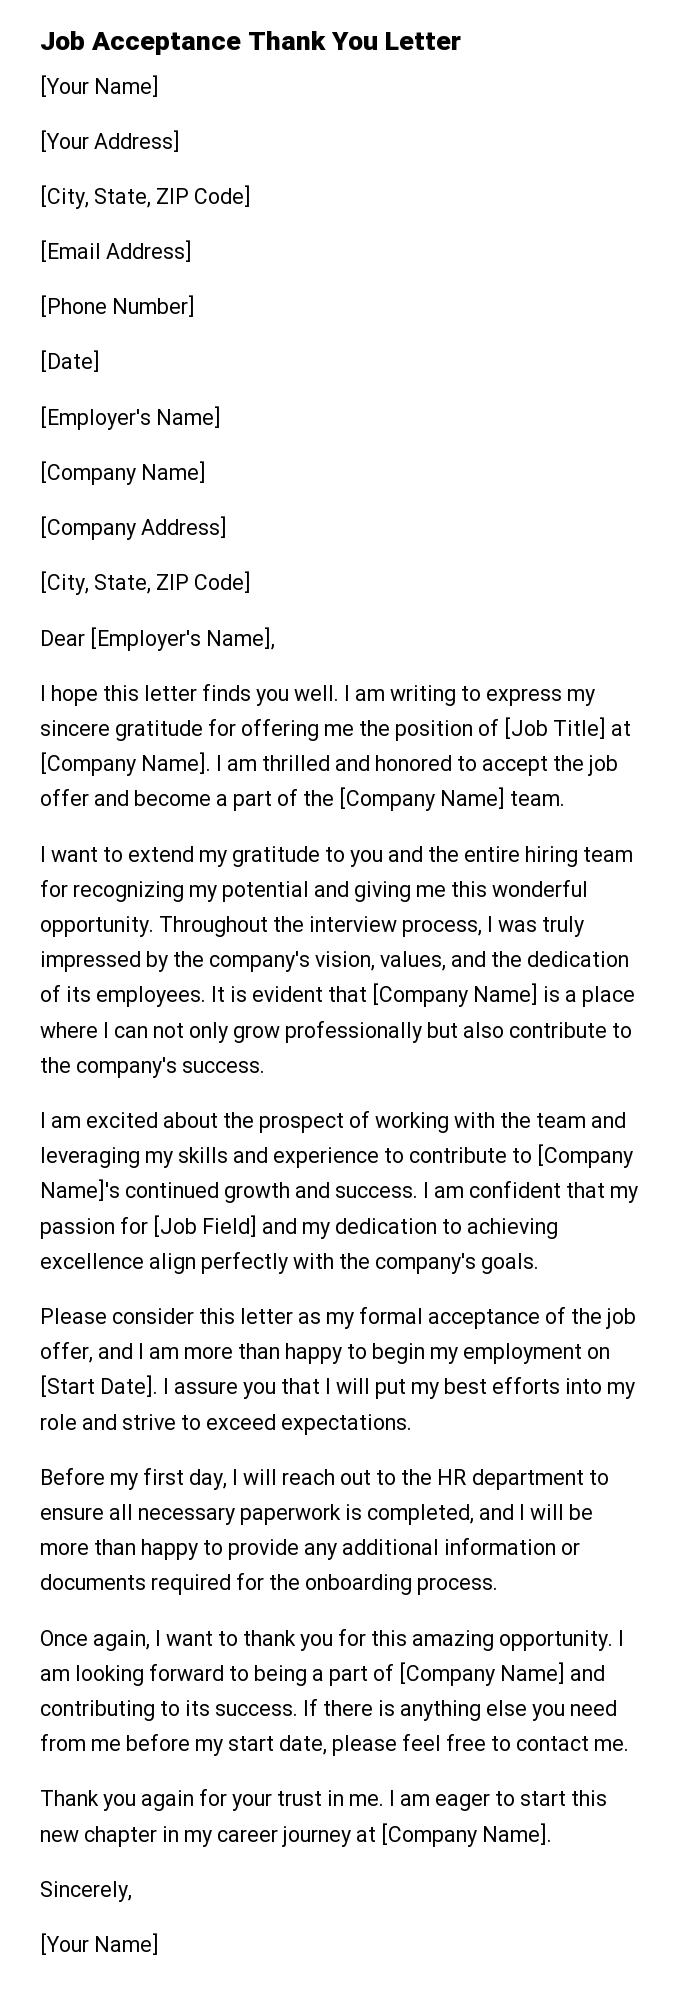 Job Acceptance Thank You Letter